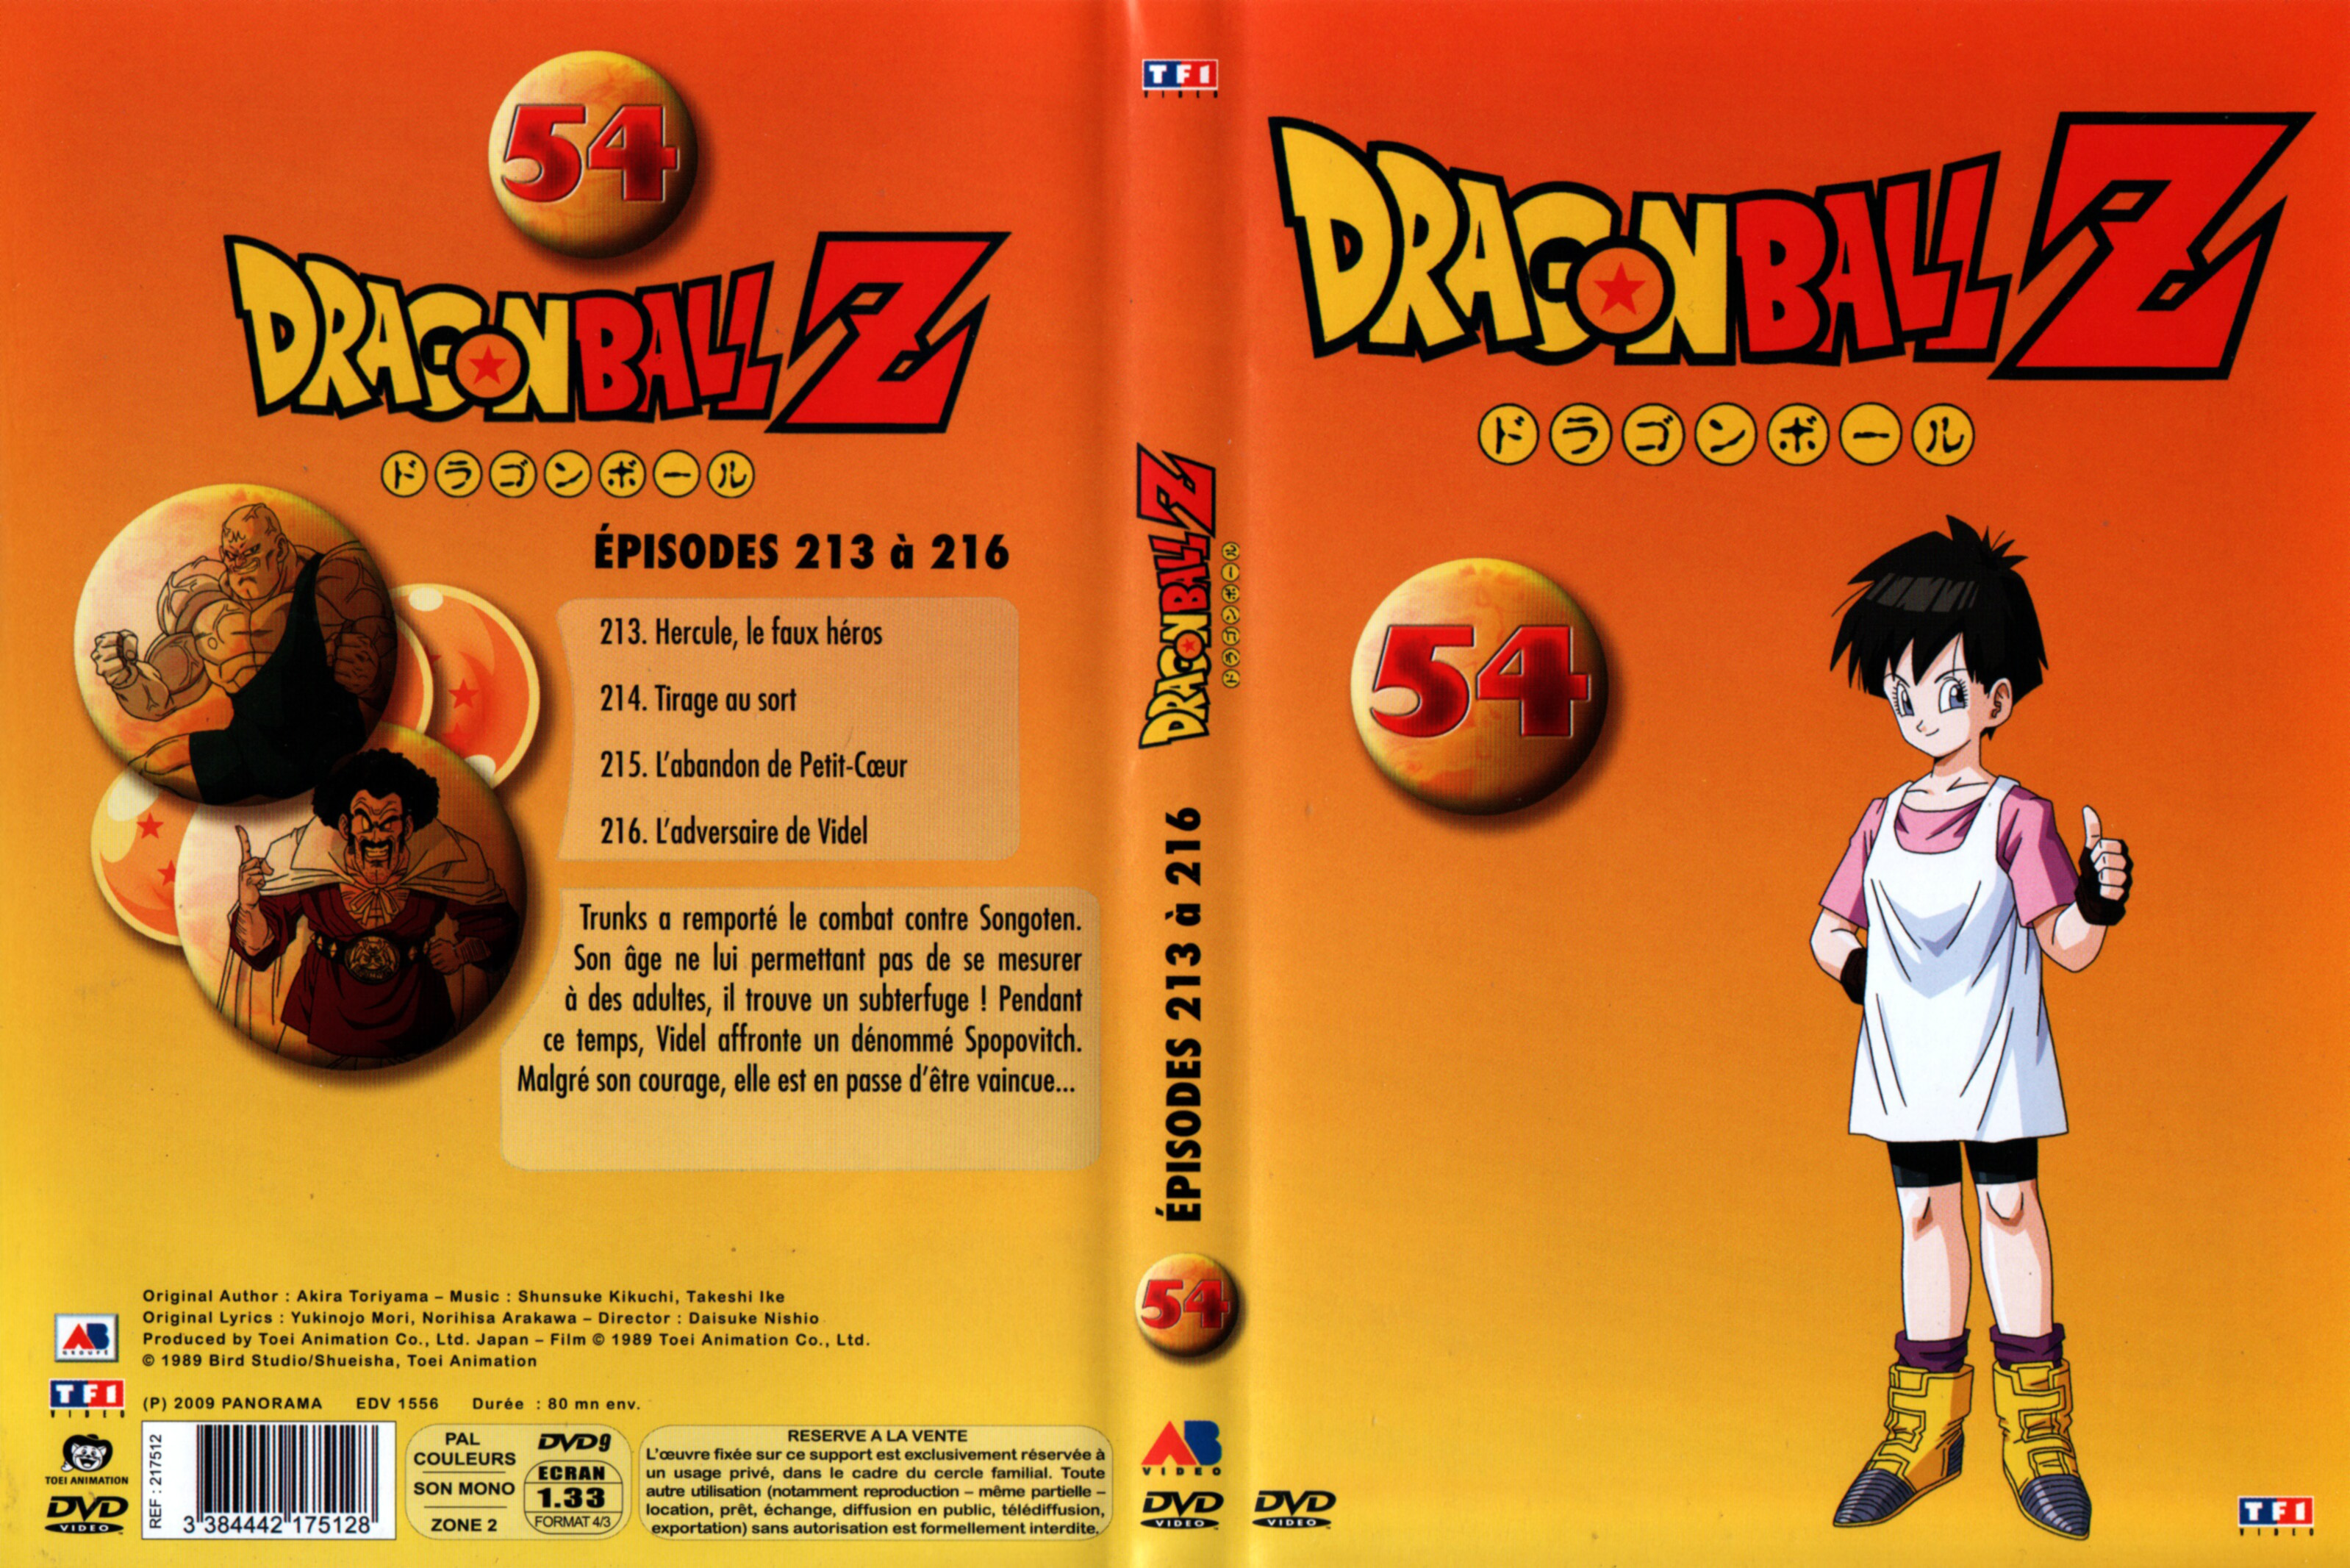 Jaquette DVD Dragon Ball Z vol 54